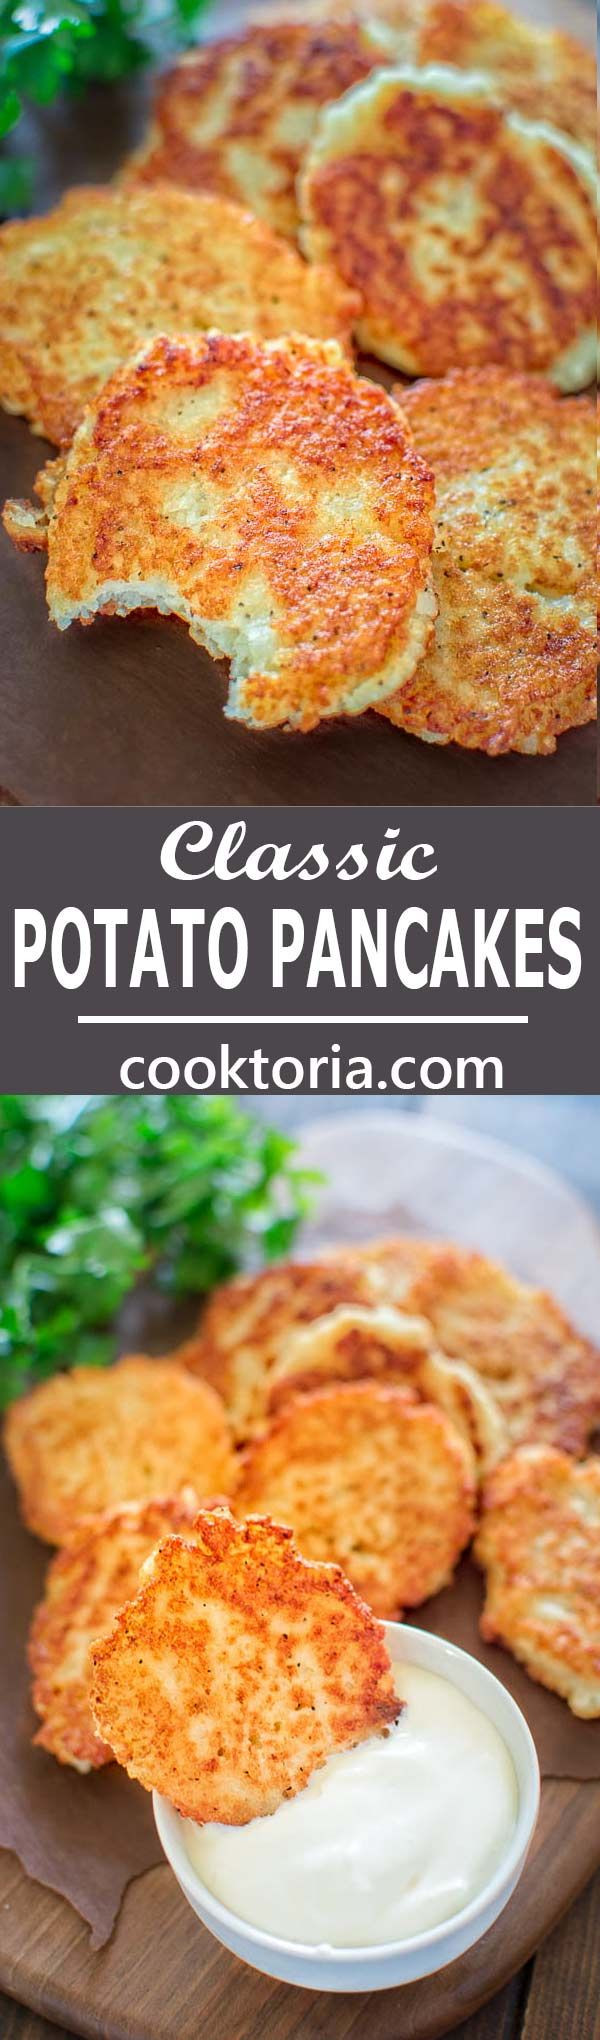 Russet Potato Recipes
 best Best fort Foods images on Pinterest